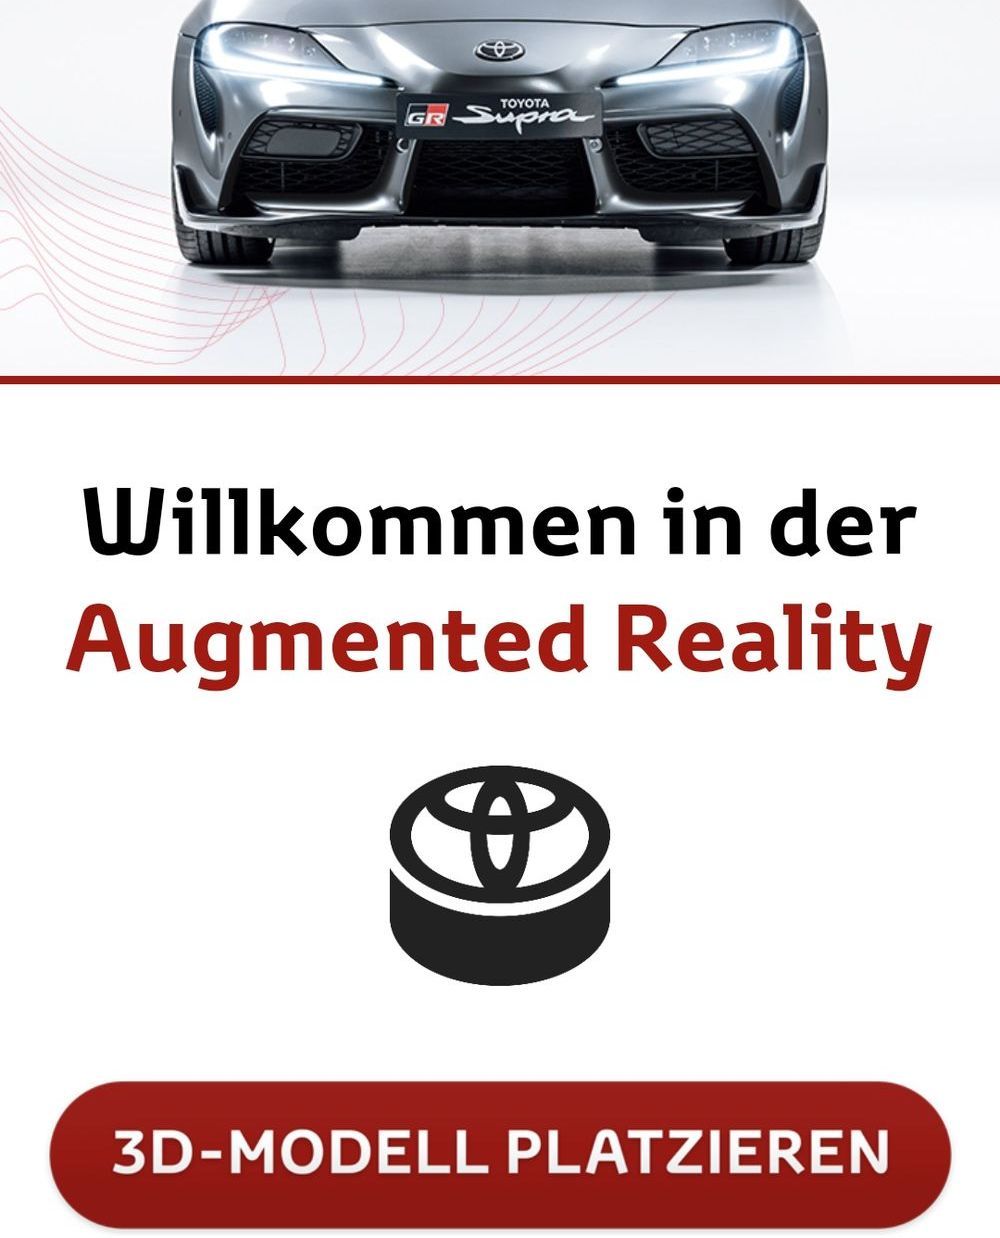 Augmented Reality mit dem Toyota GR Supra